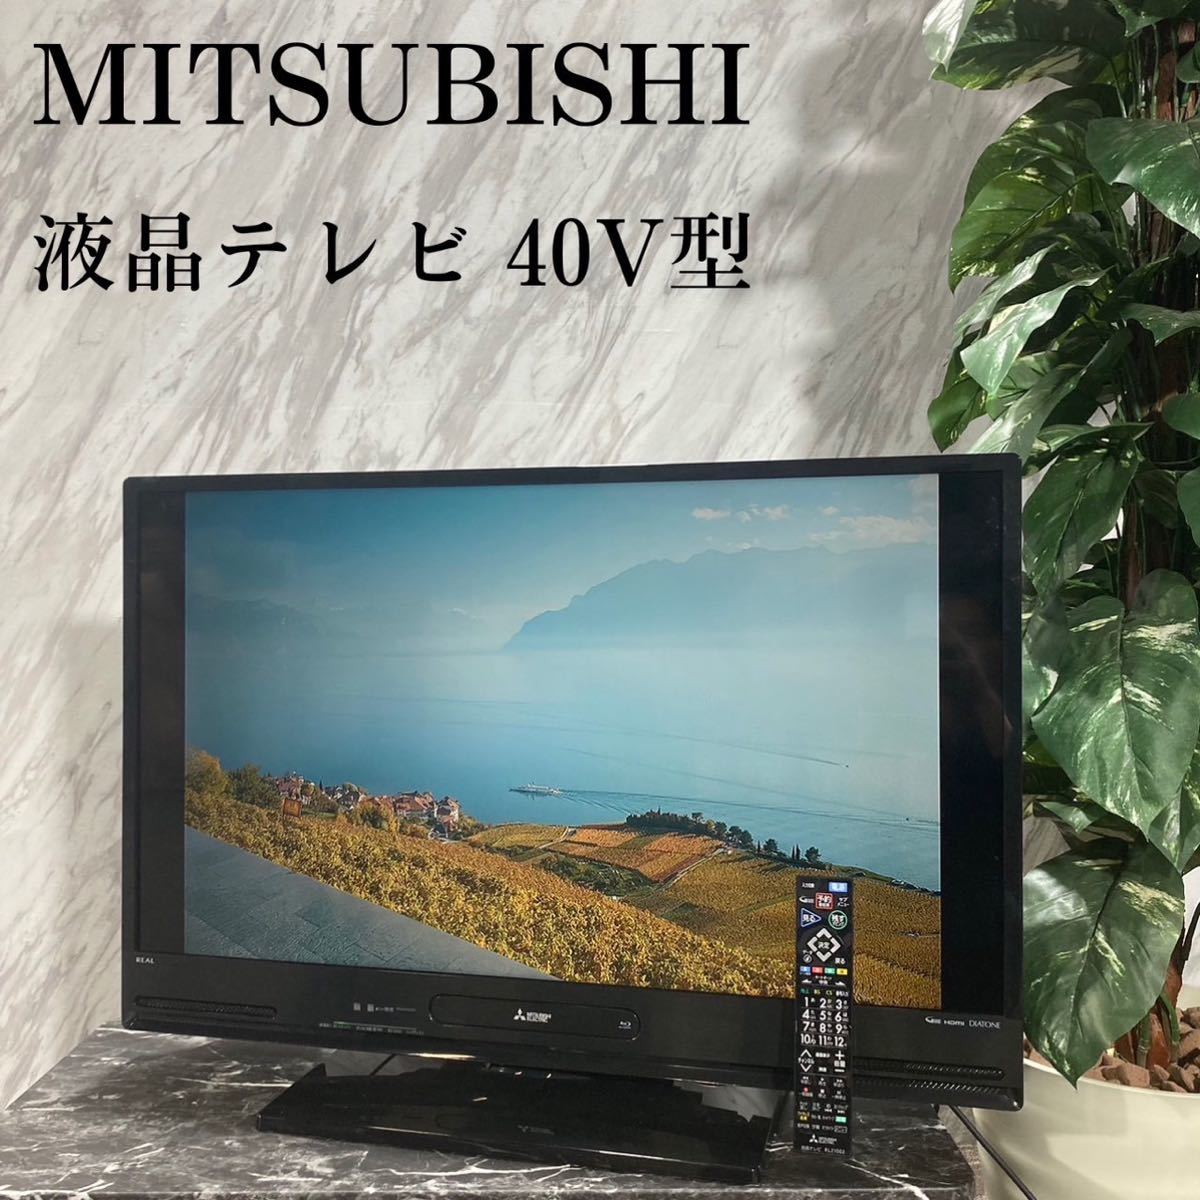 MITSUBISHI 液晶テレビ LCD-A40BHR7 40V型 E205 www.greendotgroup.ca